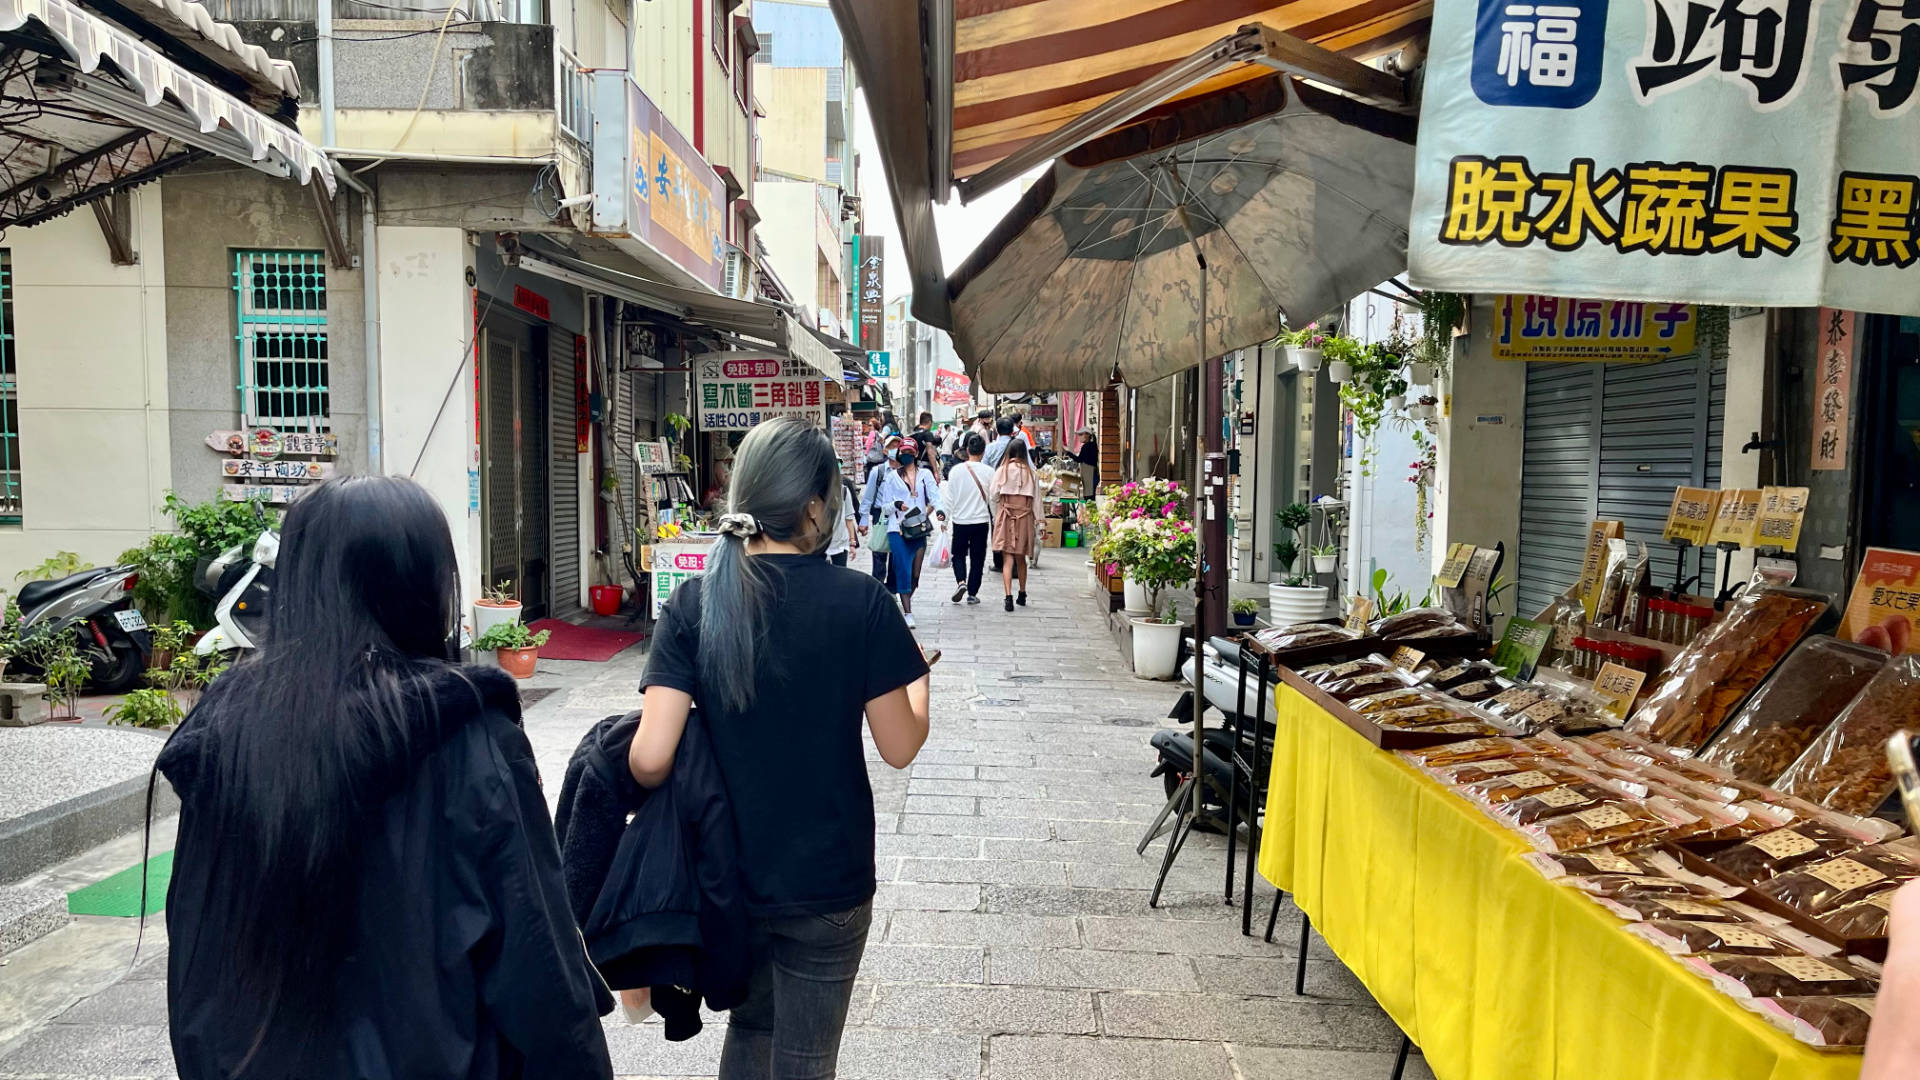 People walking along Anping Old Street in Tainan.